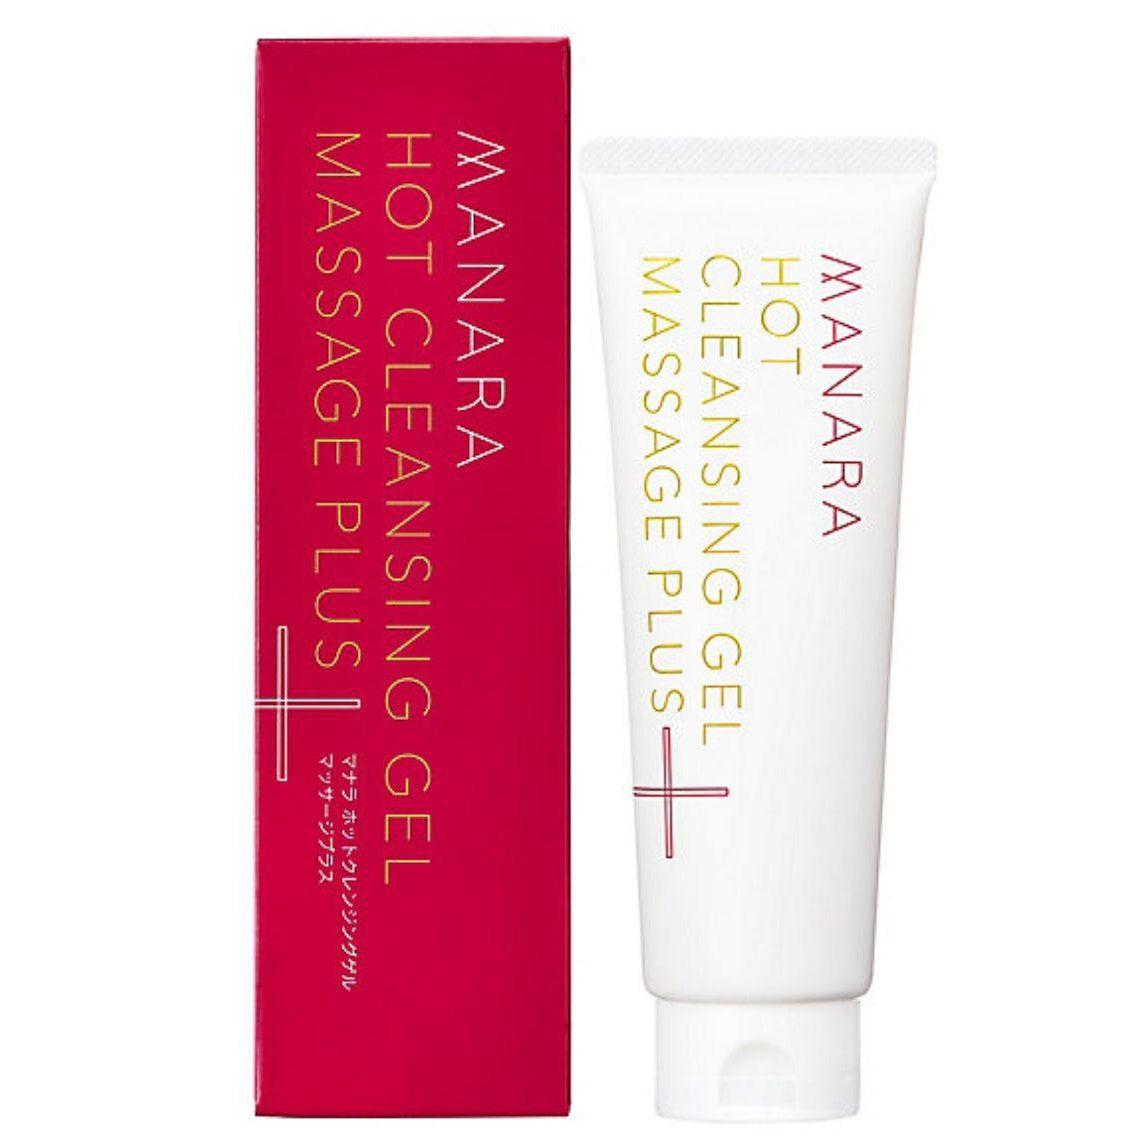 Manara Hot Cleansing Gel Massage Plus Self Warming Face Cleanser 200g